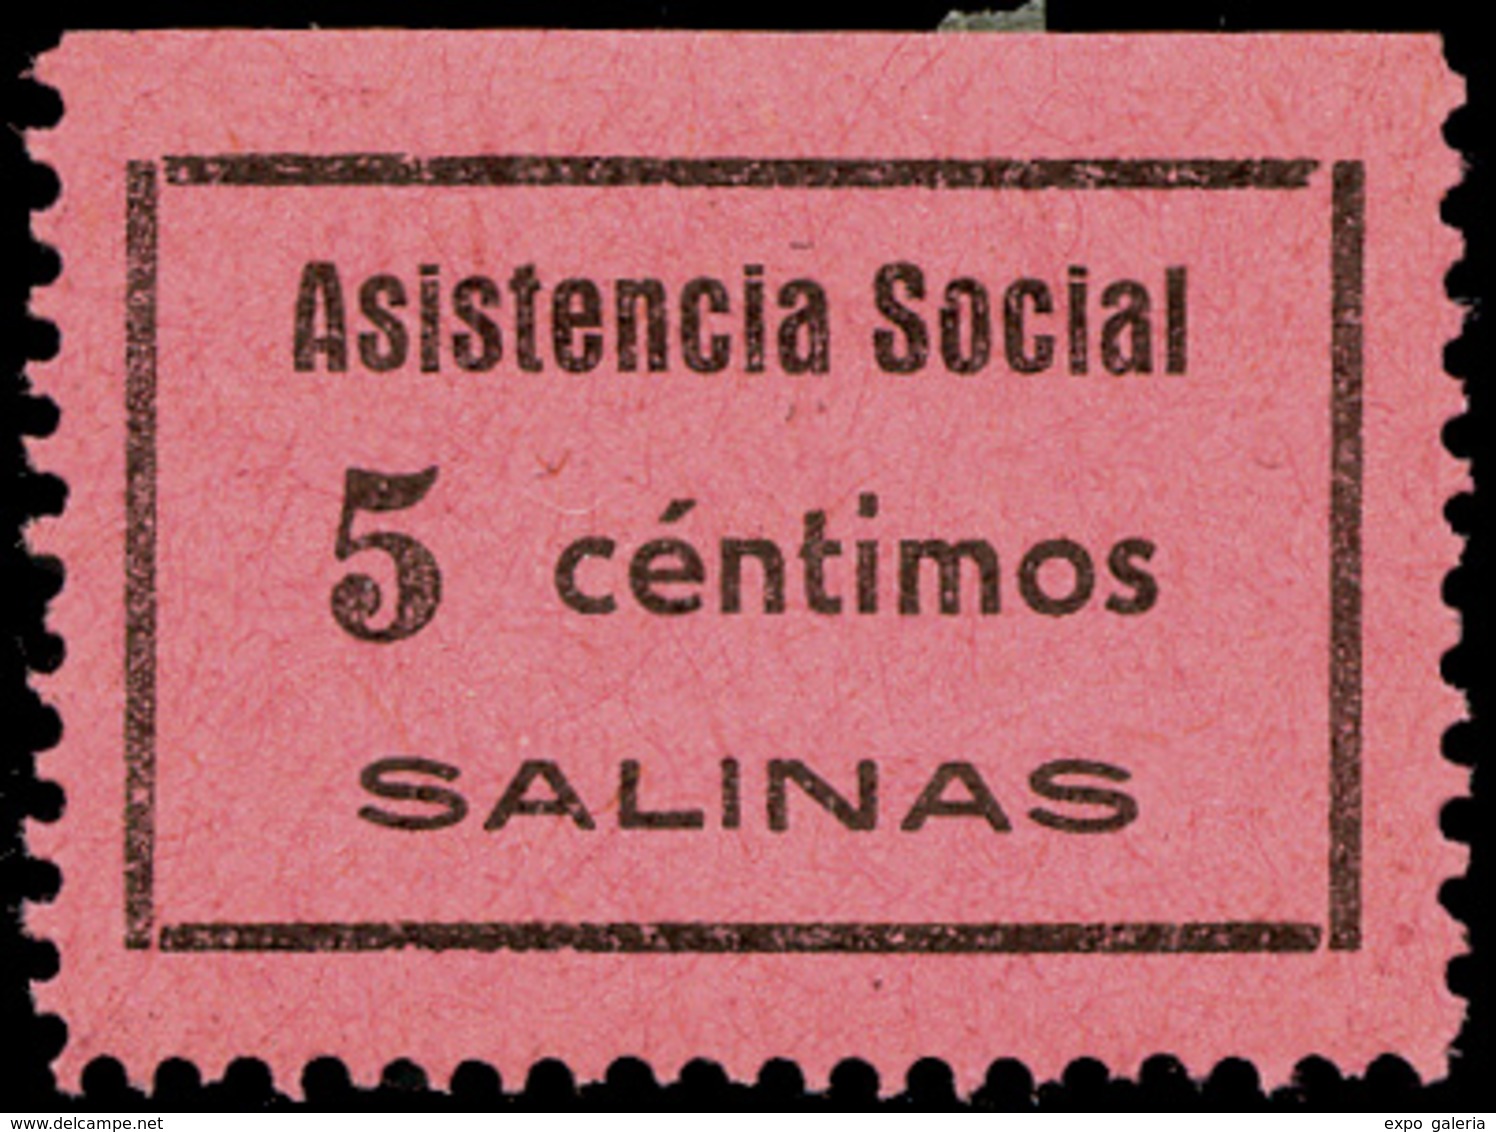 Ed. * 1186 Alicante.SALINAS. Muy Raro. - Spanish Civil War Labels